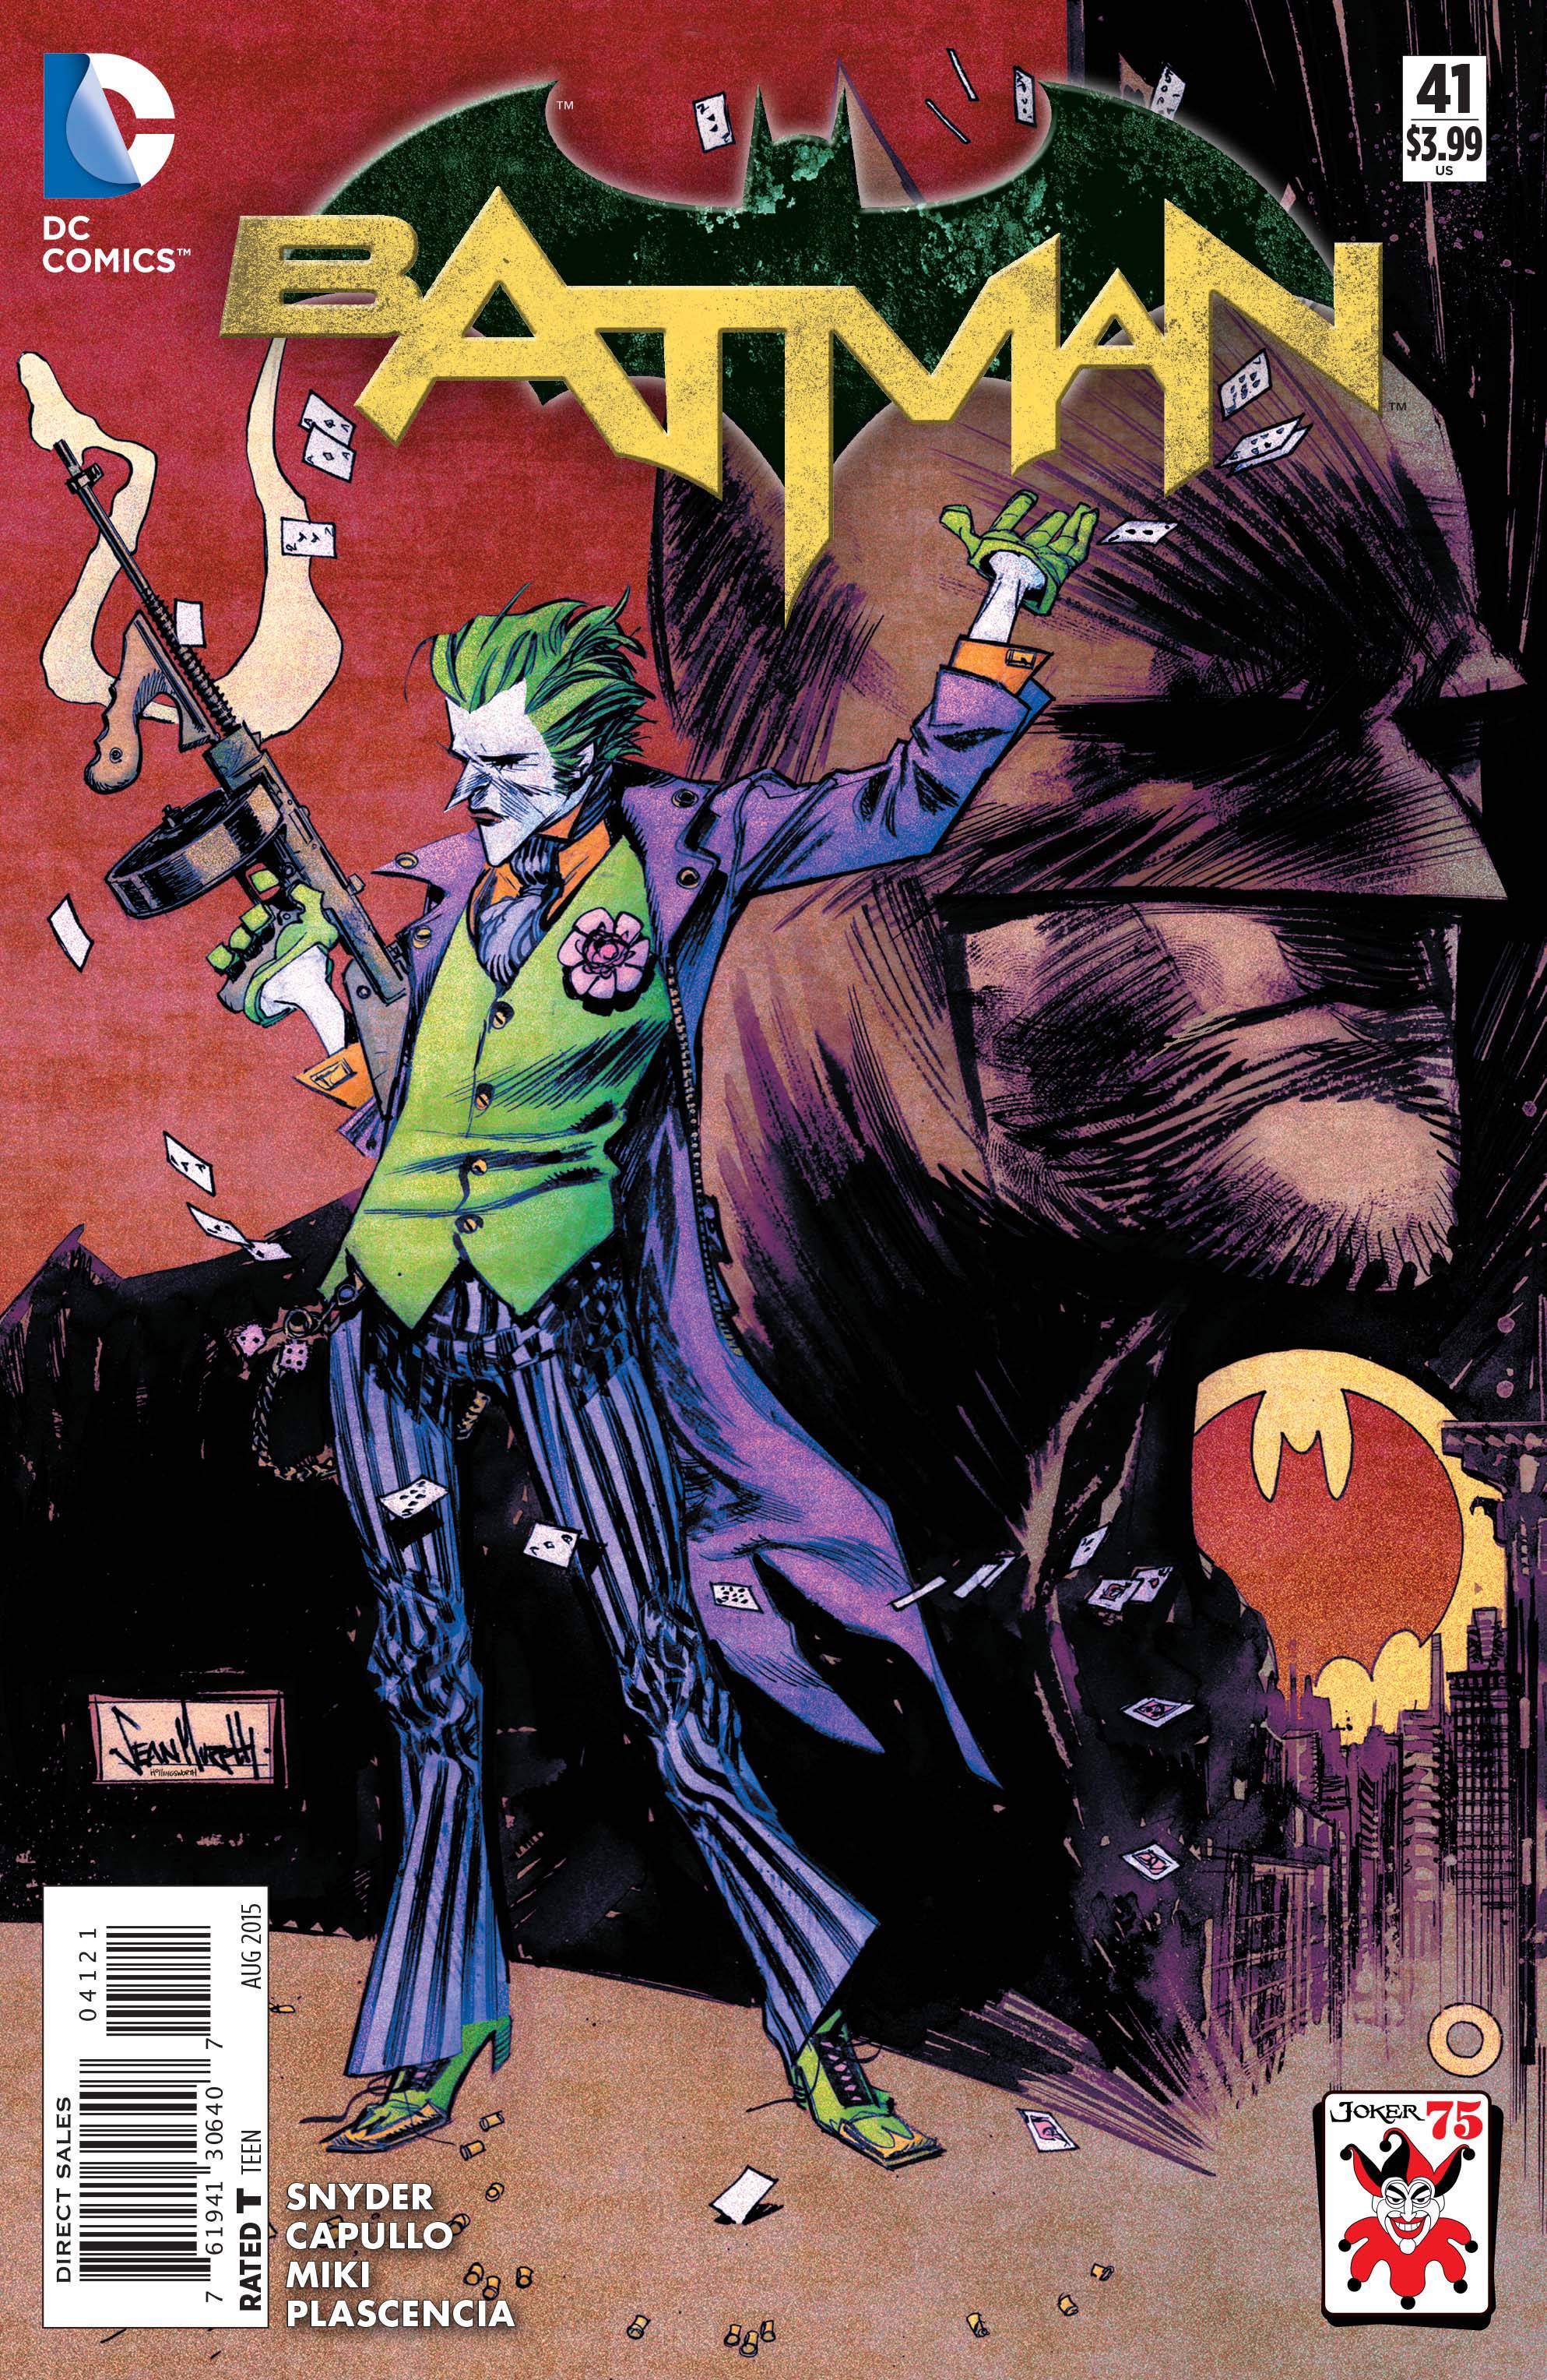 Batman #41 the Joker Variant Edition (2011)